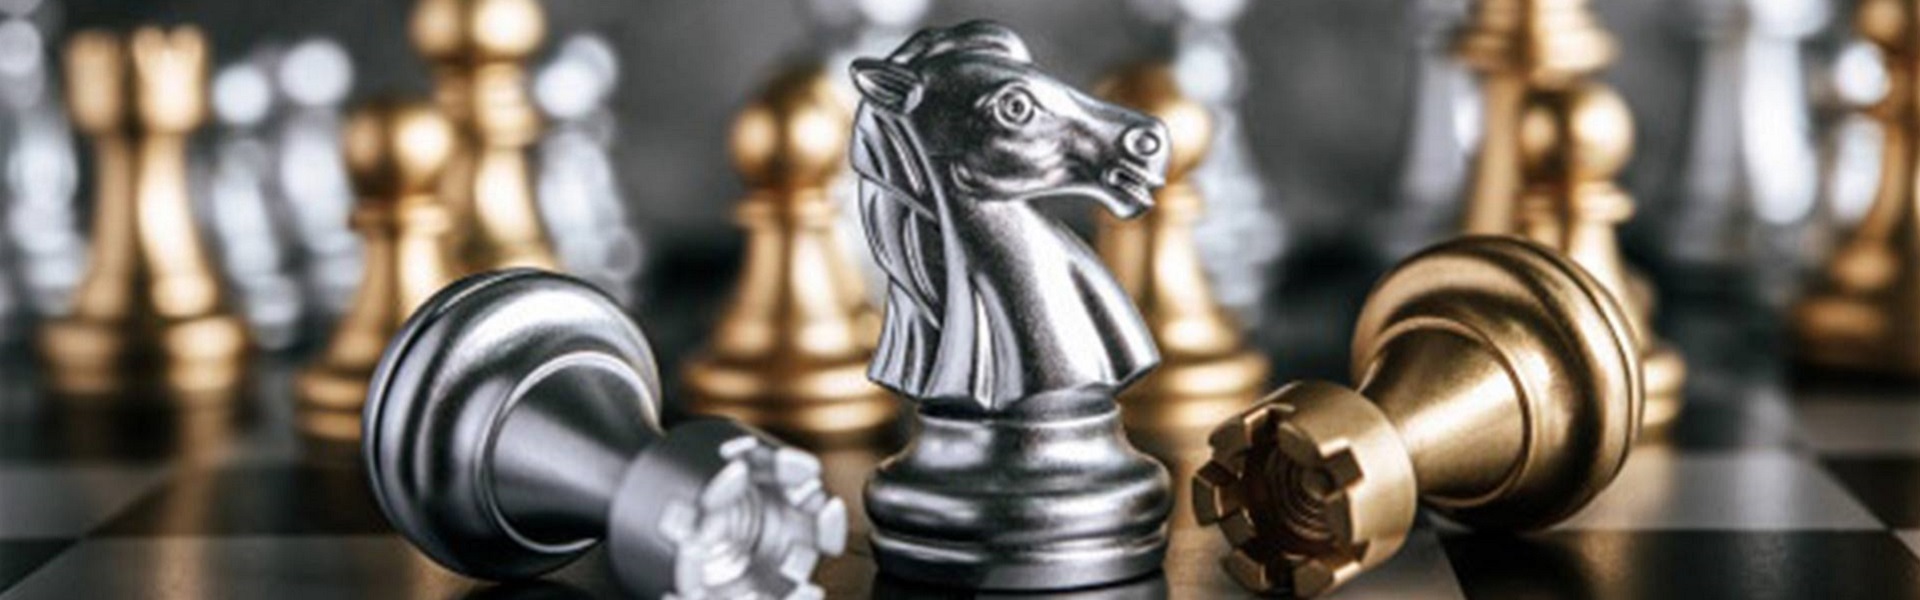 Zubni implanti Beograd | Chess lessons Dubai & New York